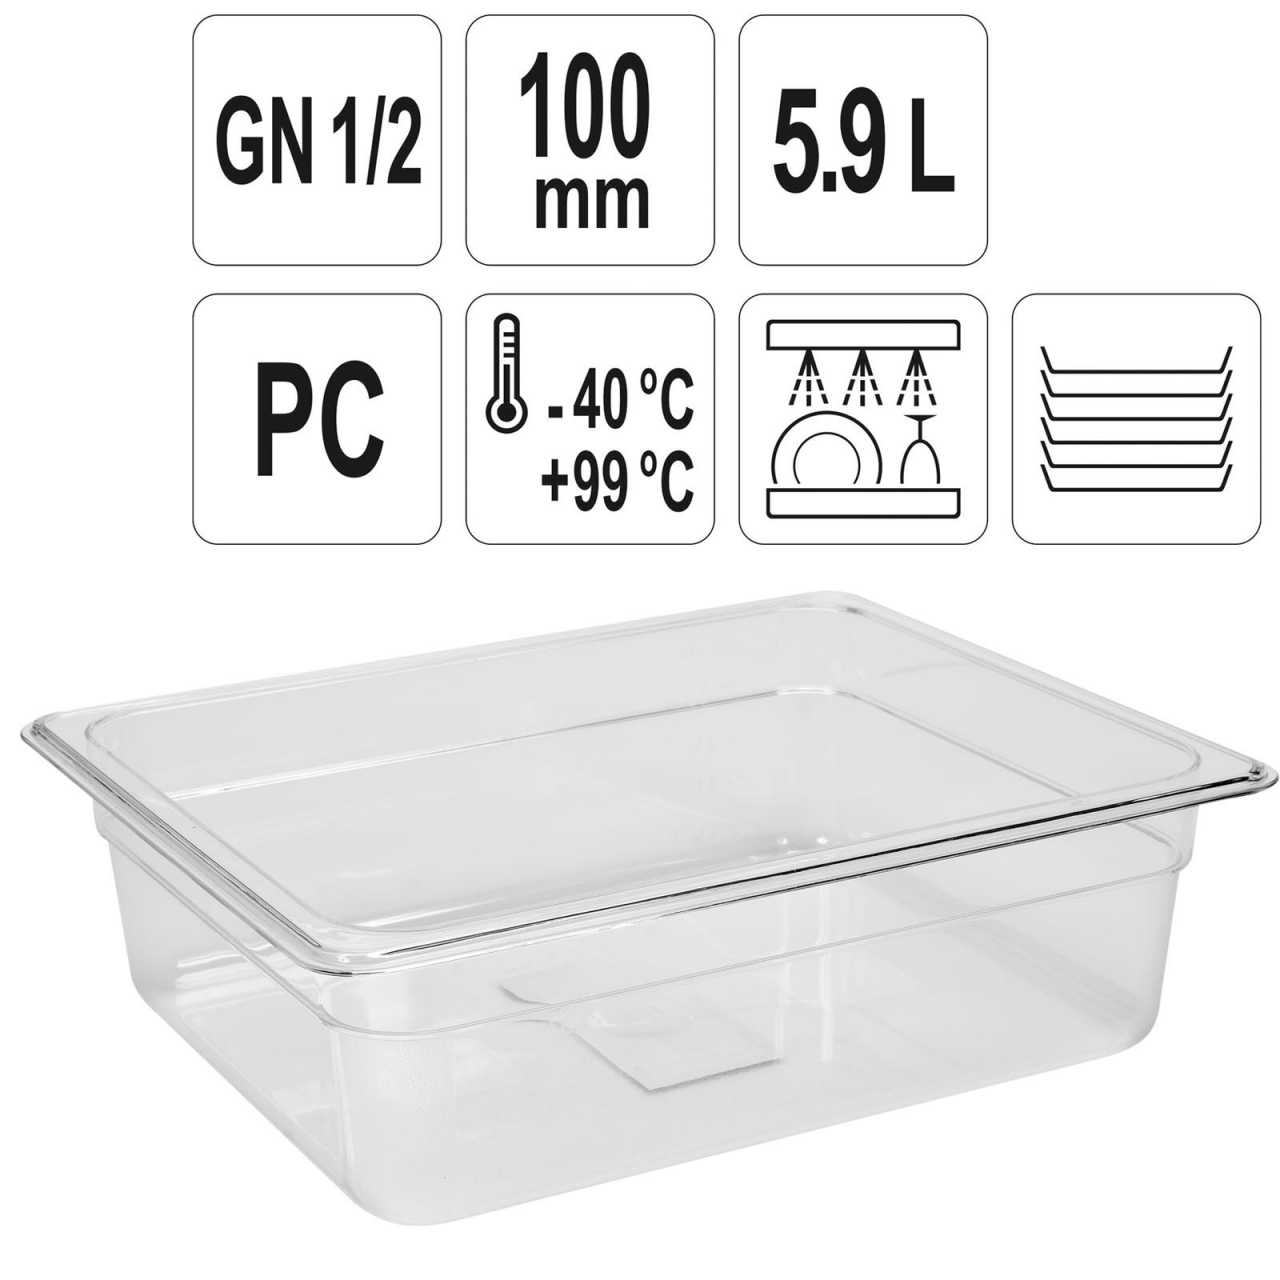 YATO Profi GN Gastronorm Behälter Kunststoff 1/2 100mm YG-00401